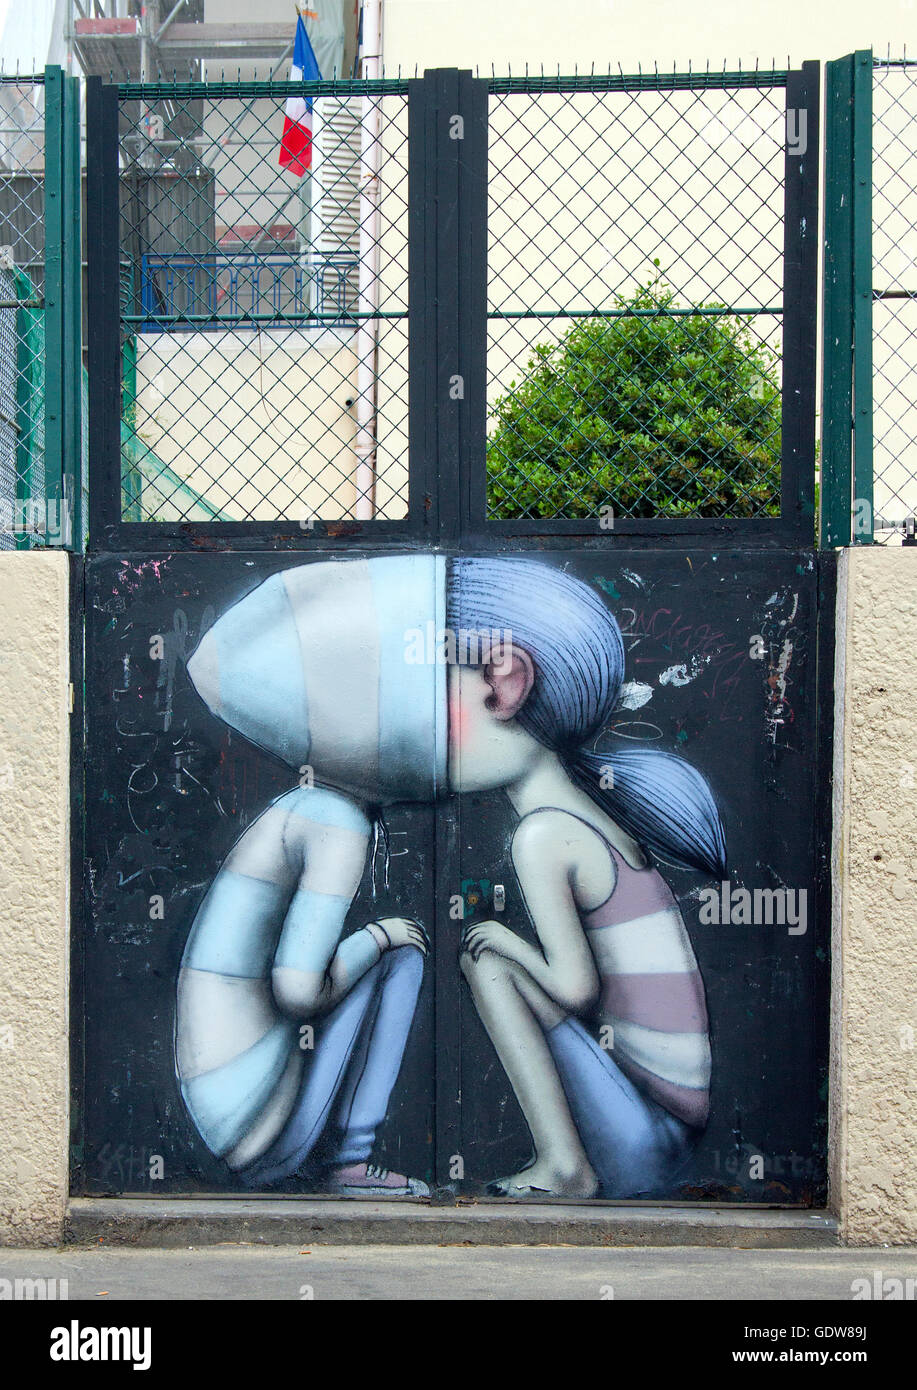 Graffiti art on a wall in Paris France Stock Photo